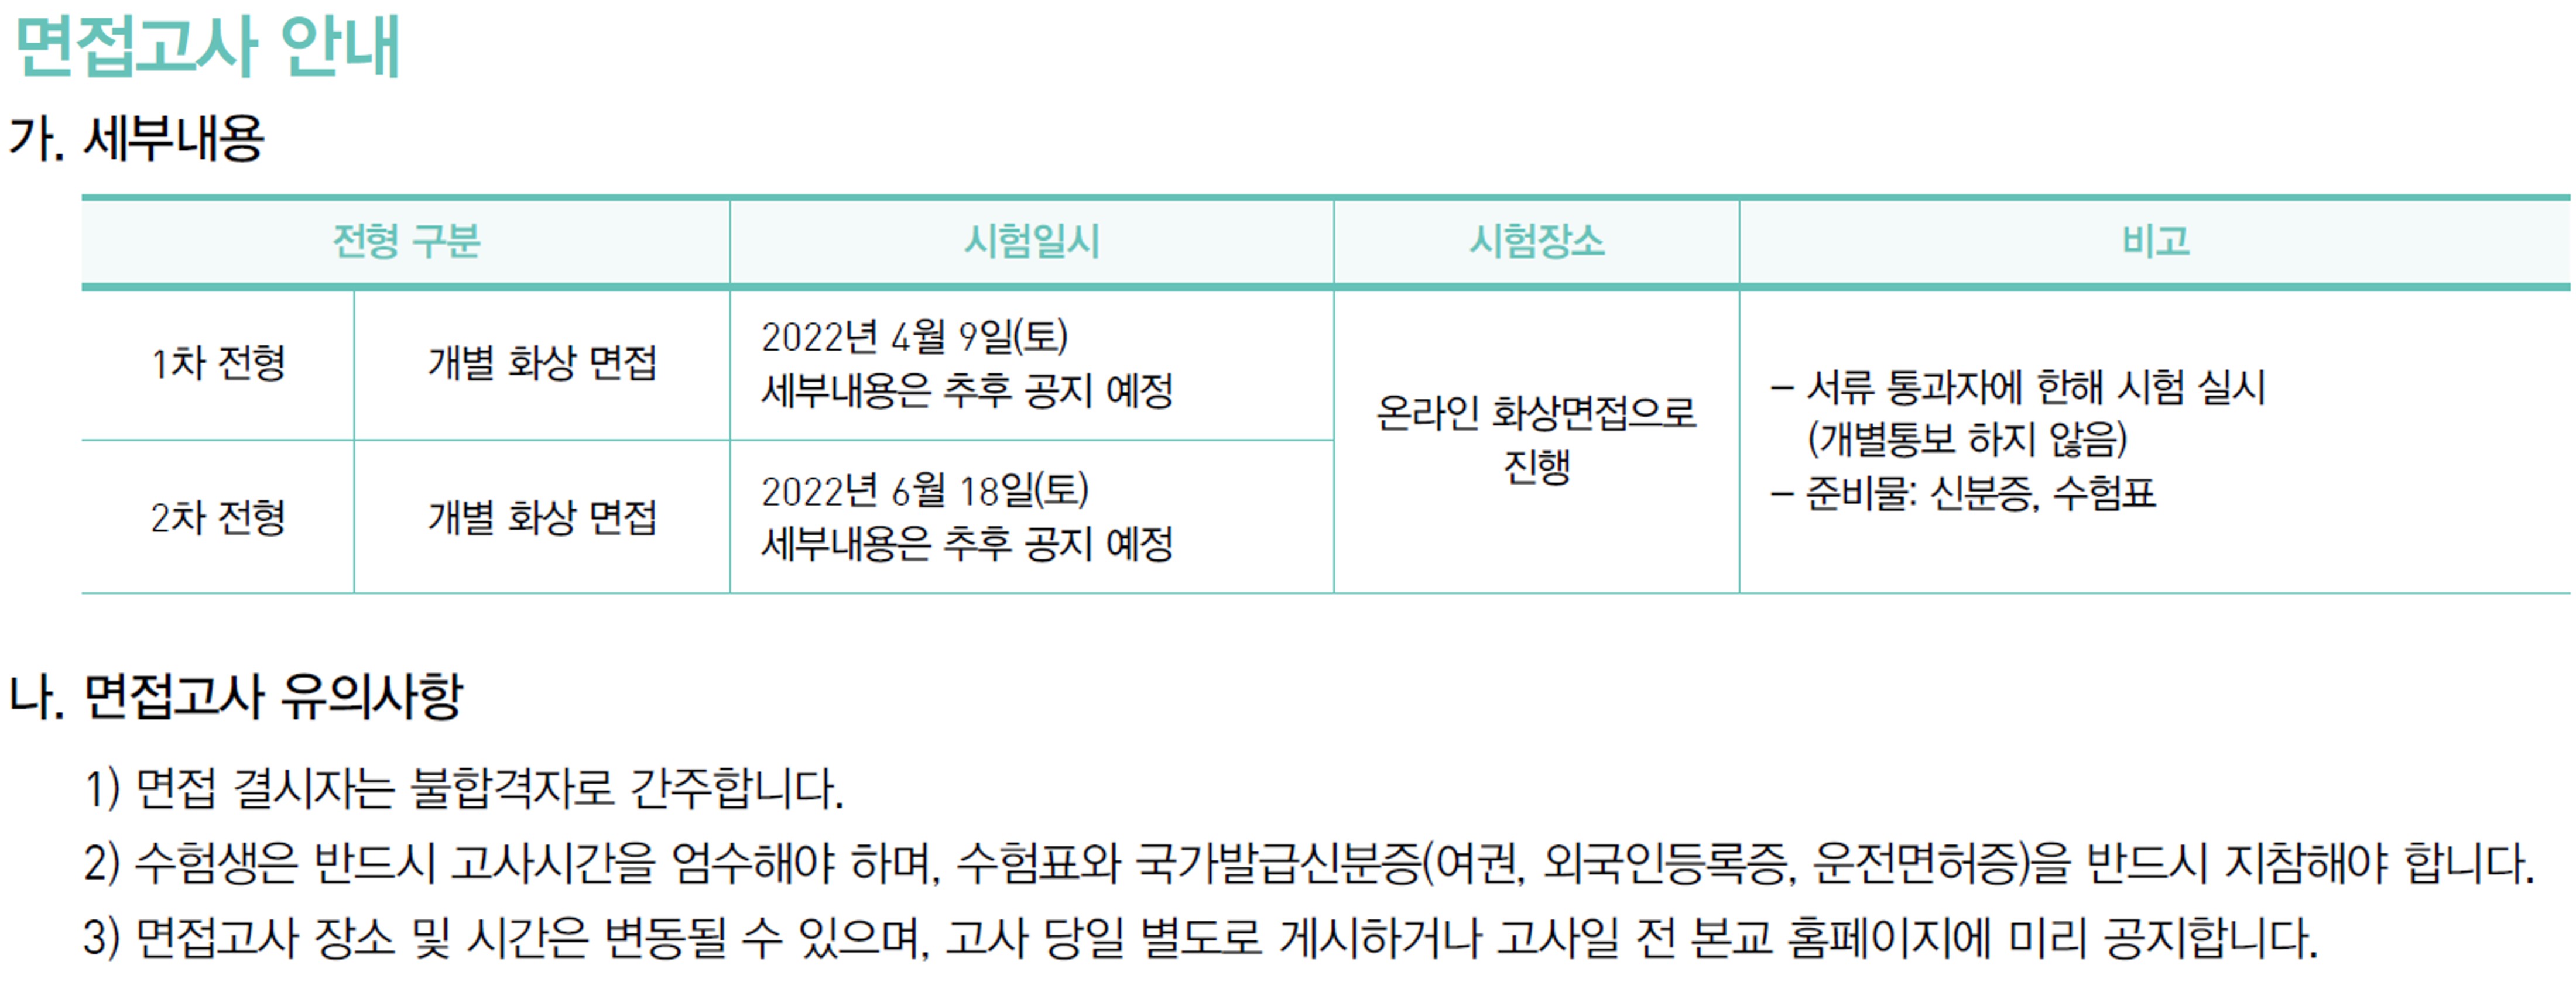 Kyung Hee University Foreign Student Admission Admission Factors_English Version 경희대 외국인전형 전형방법_영어본_02_전형방법.jpg